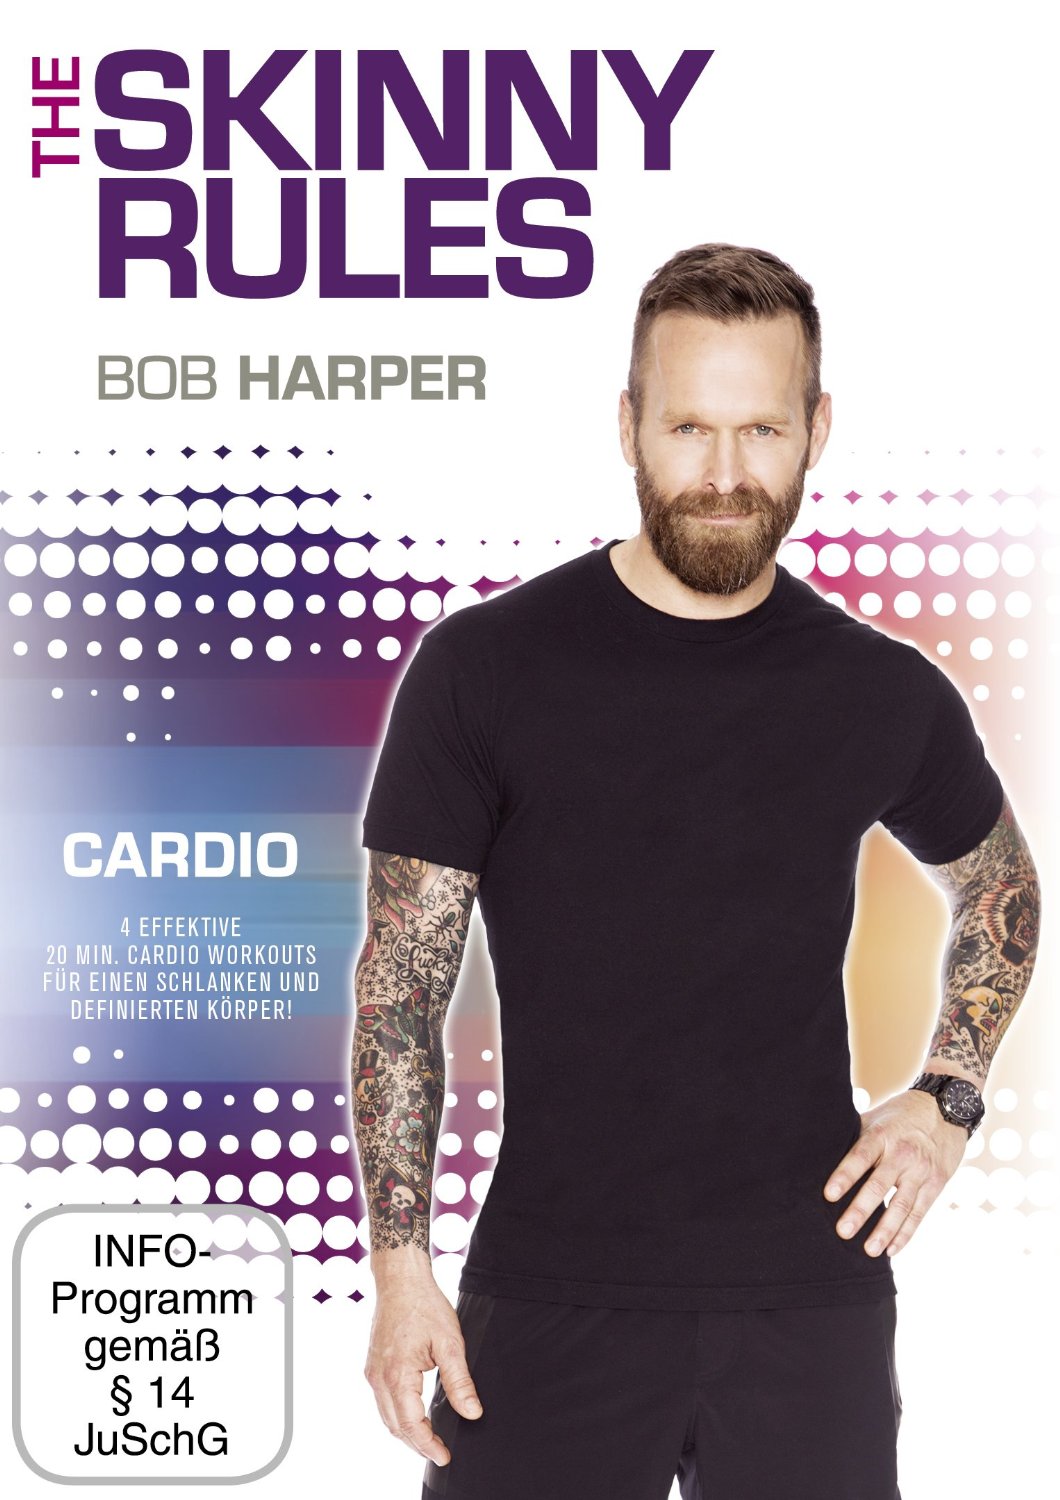 The Skinny Rules Cardio Dvd Bob Harper